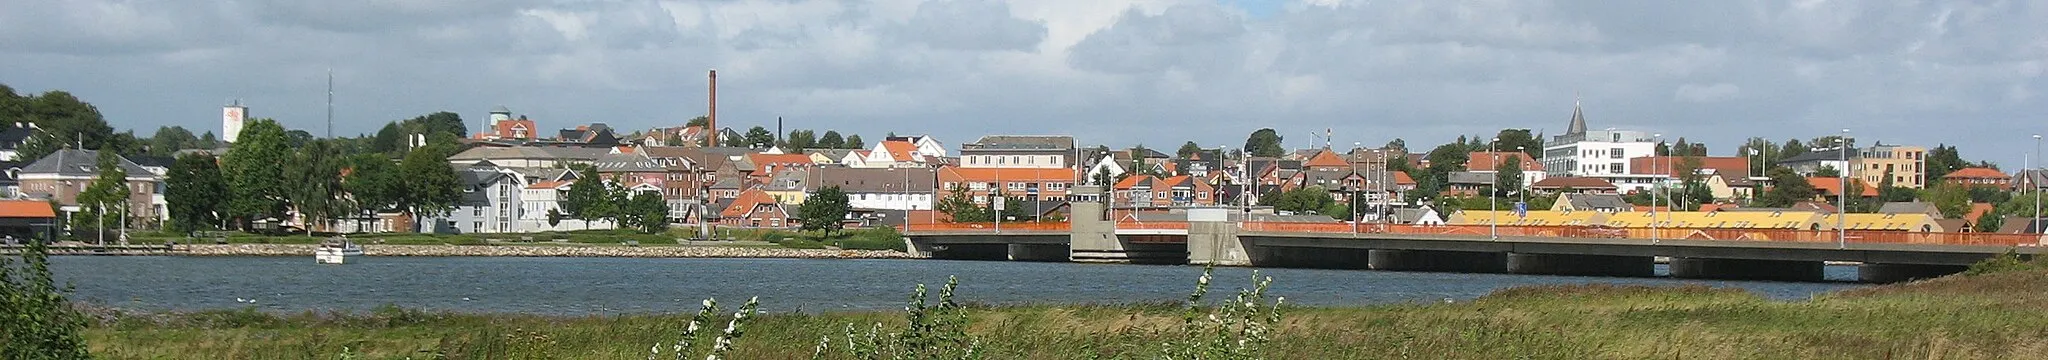 Bild av Nordjylland